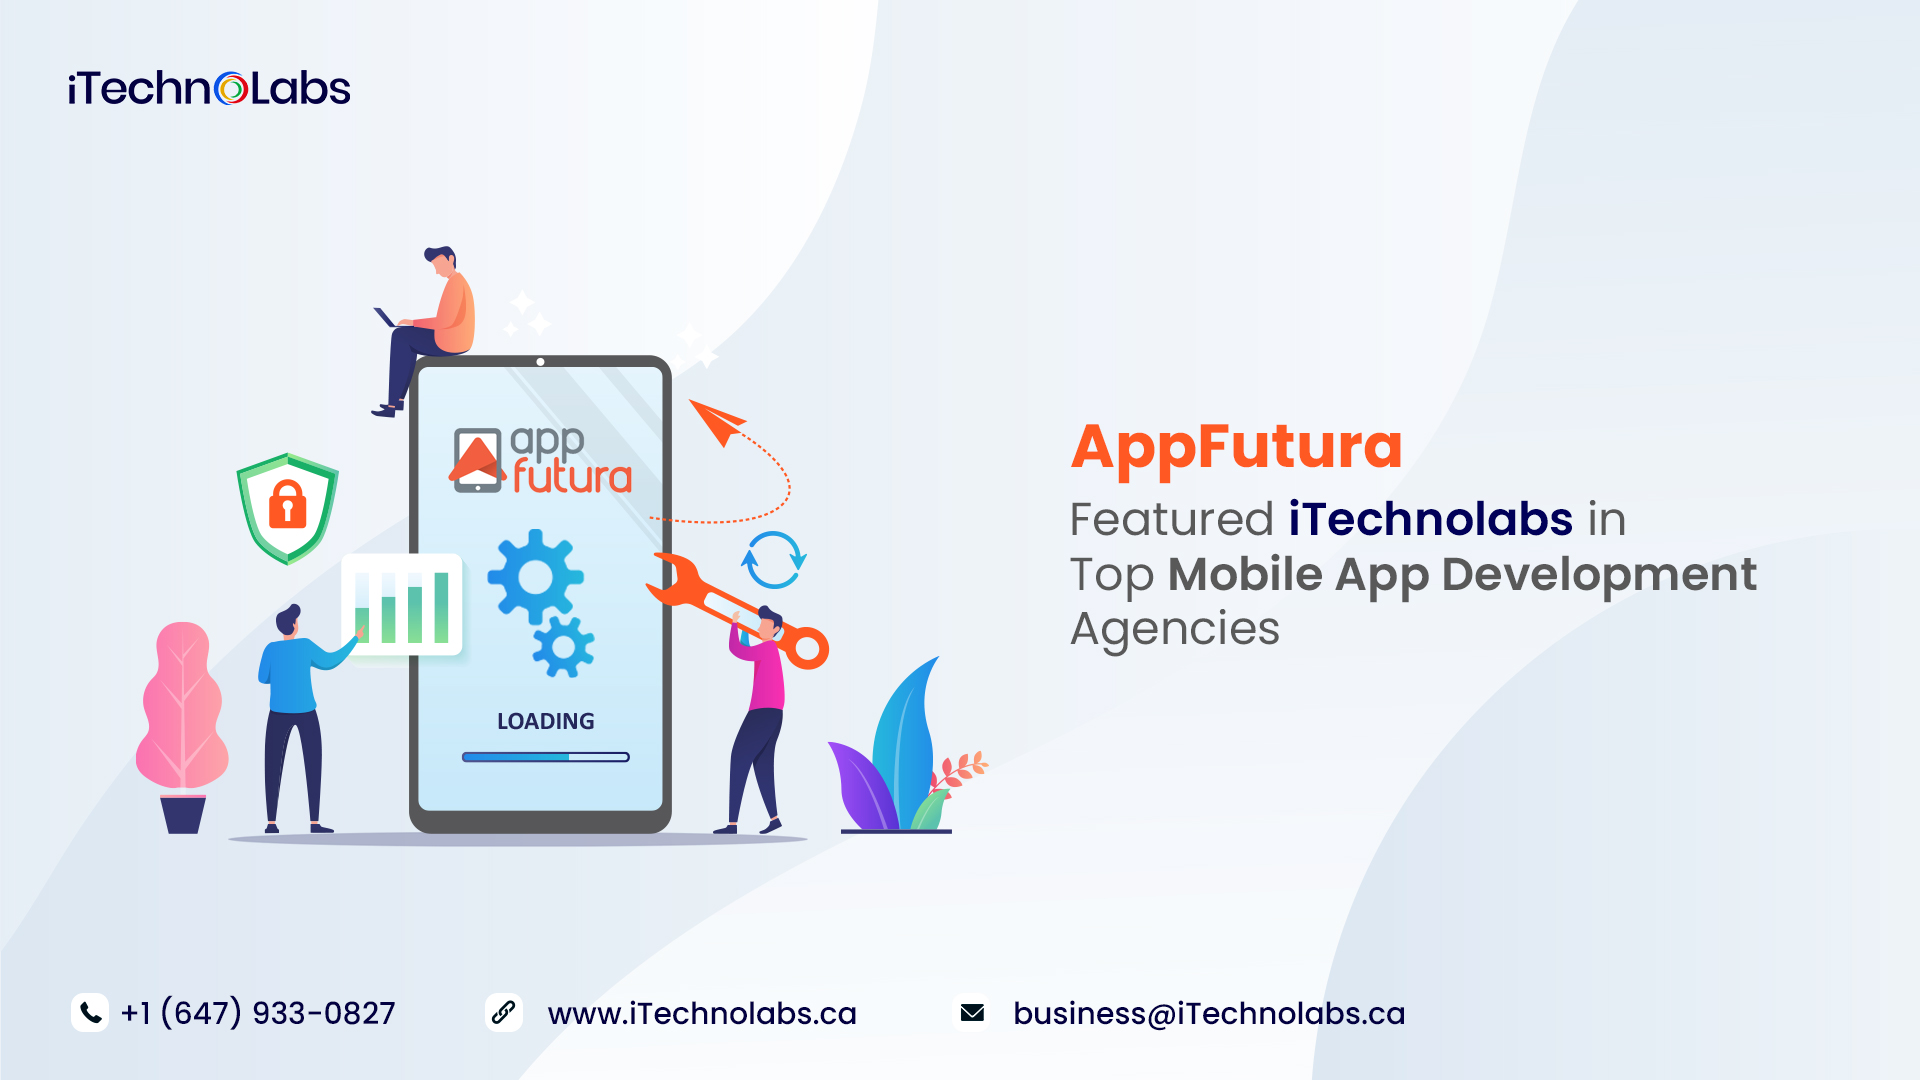 appfutura featured itechnolabs in top mobile app development agencies